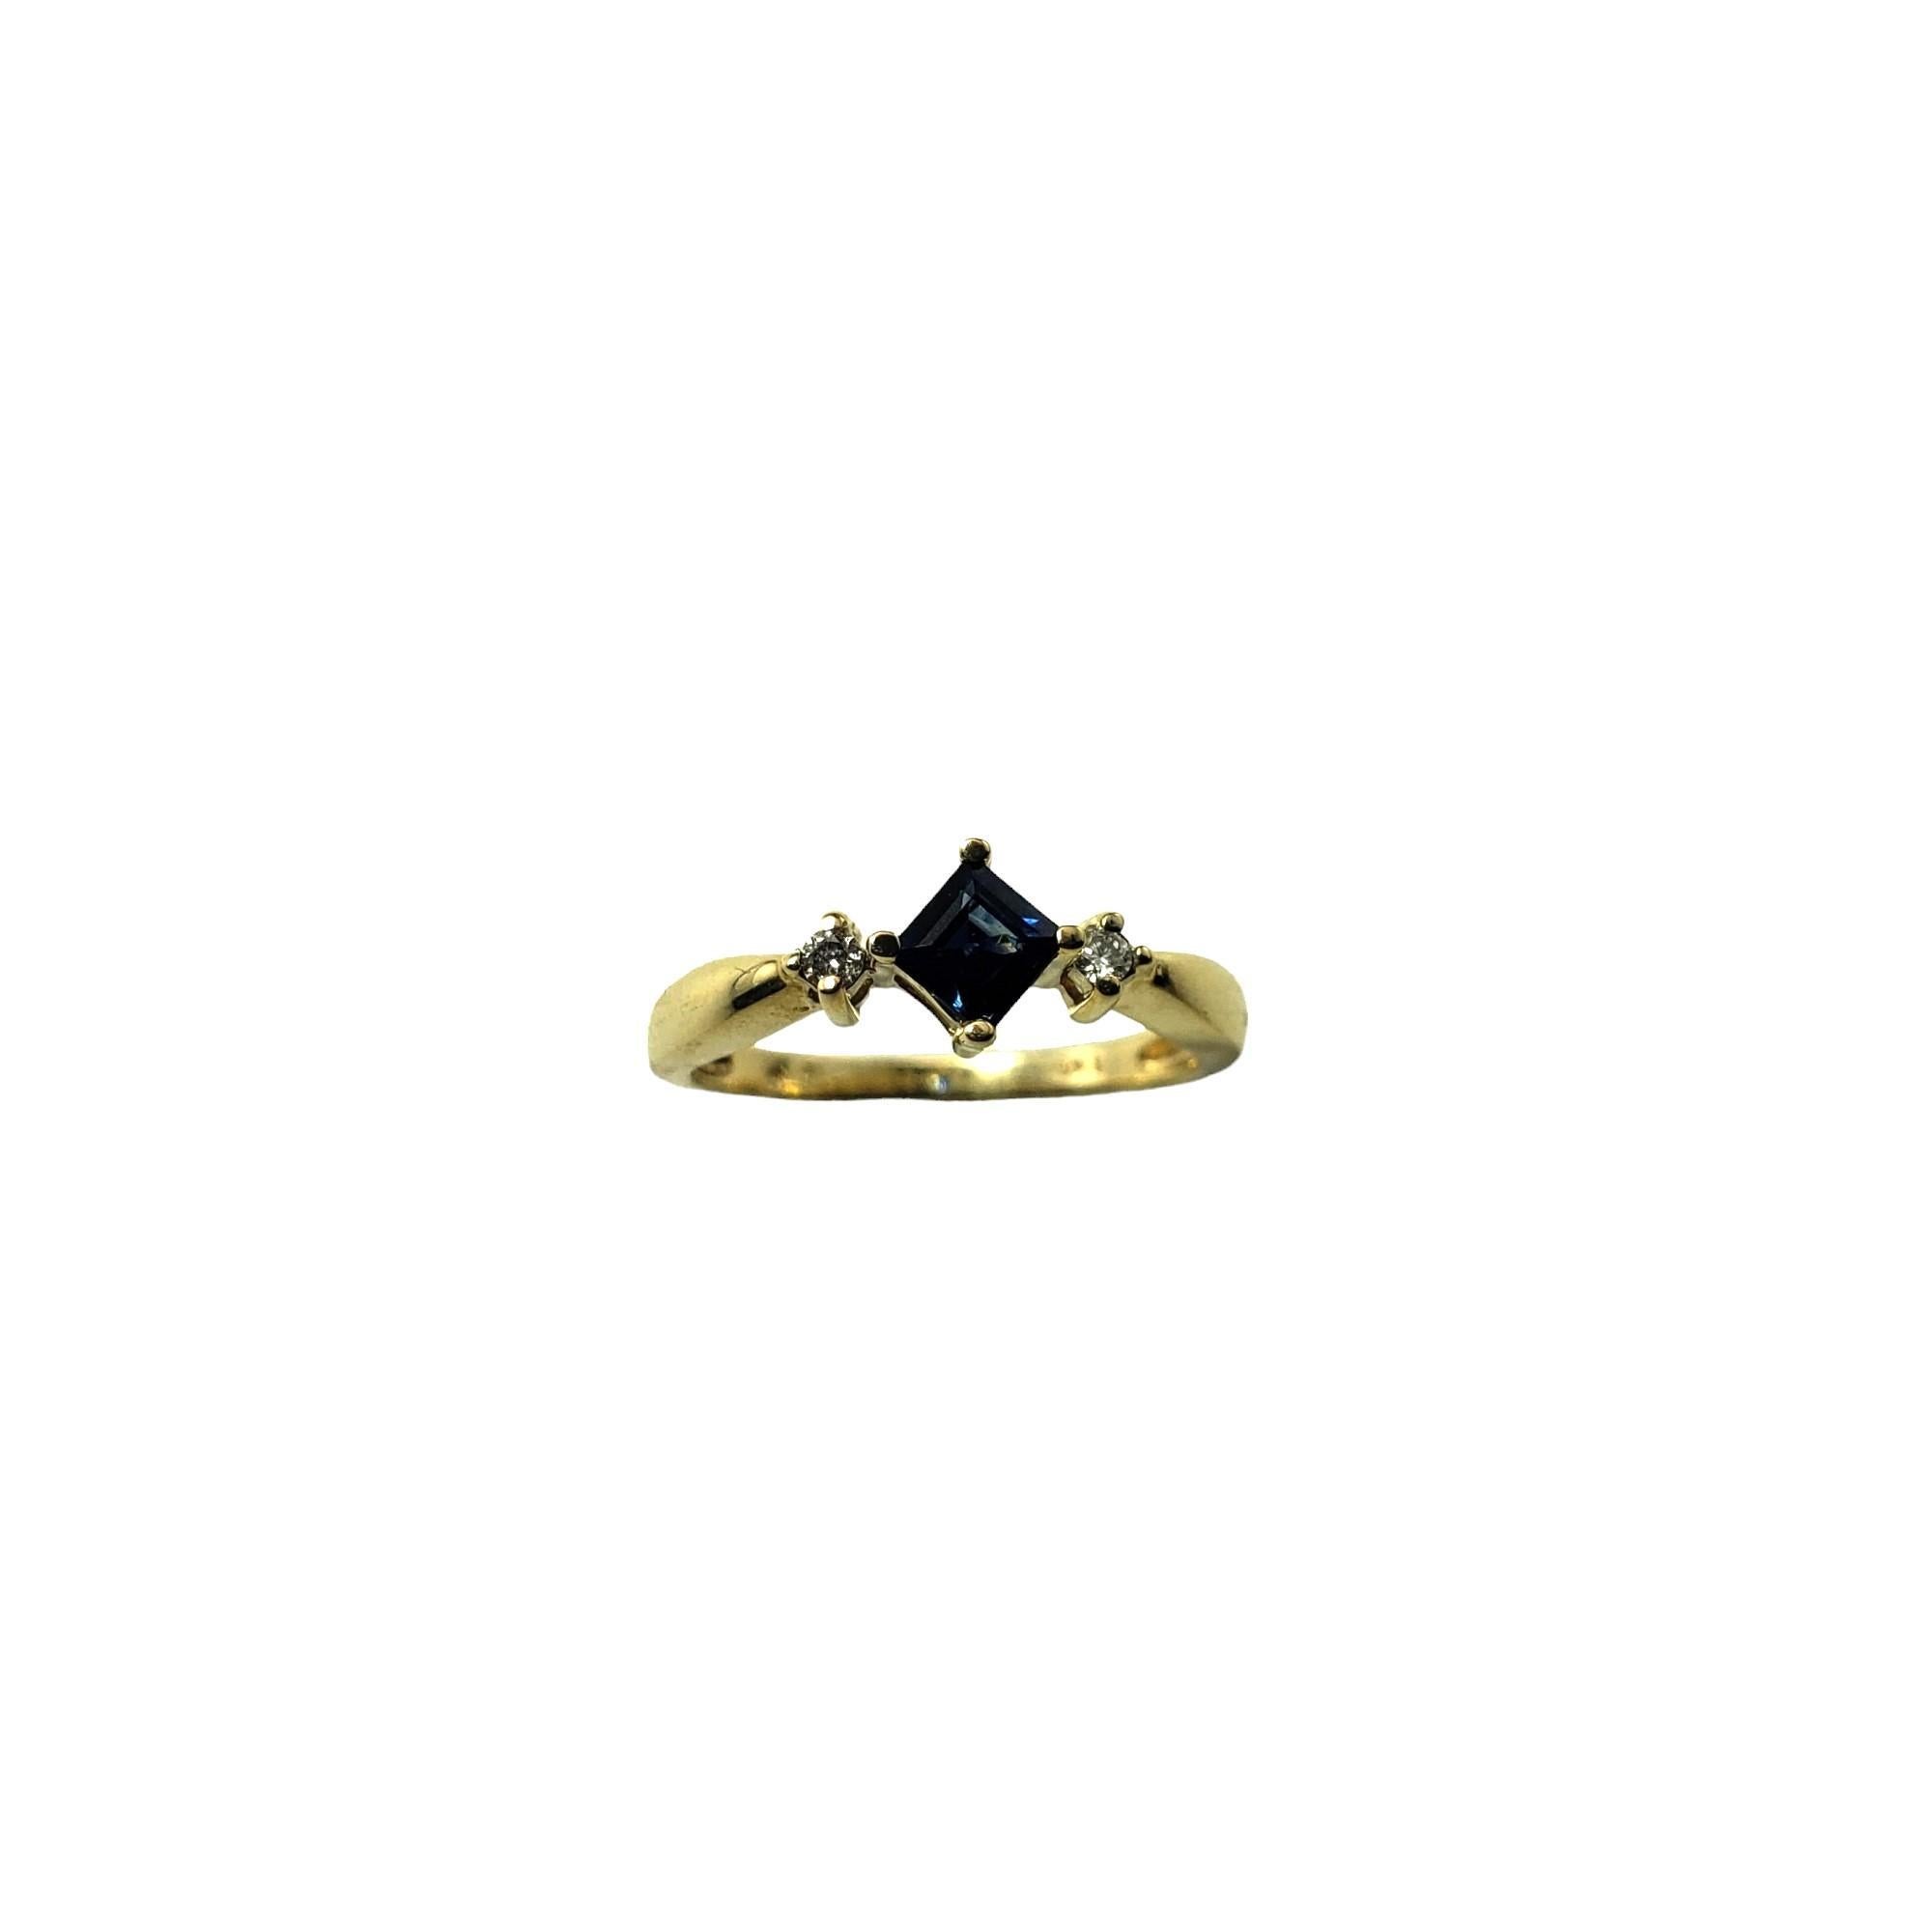 10 Karat Yellow Gold Sapphire and Diamond Ring Size 4.25 #15792